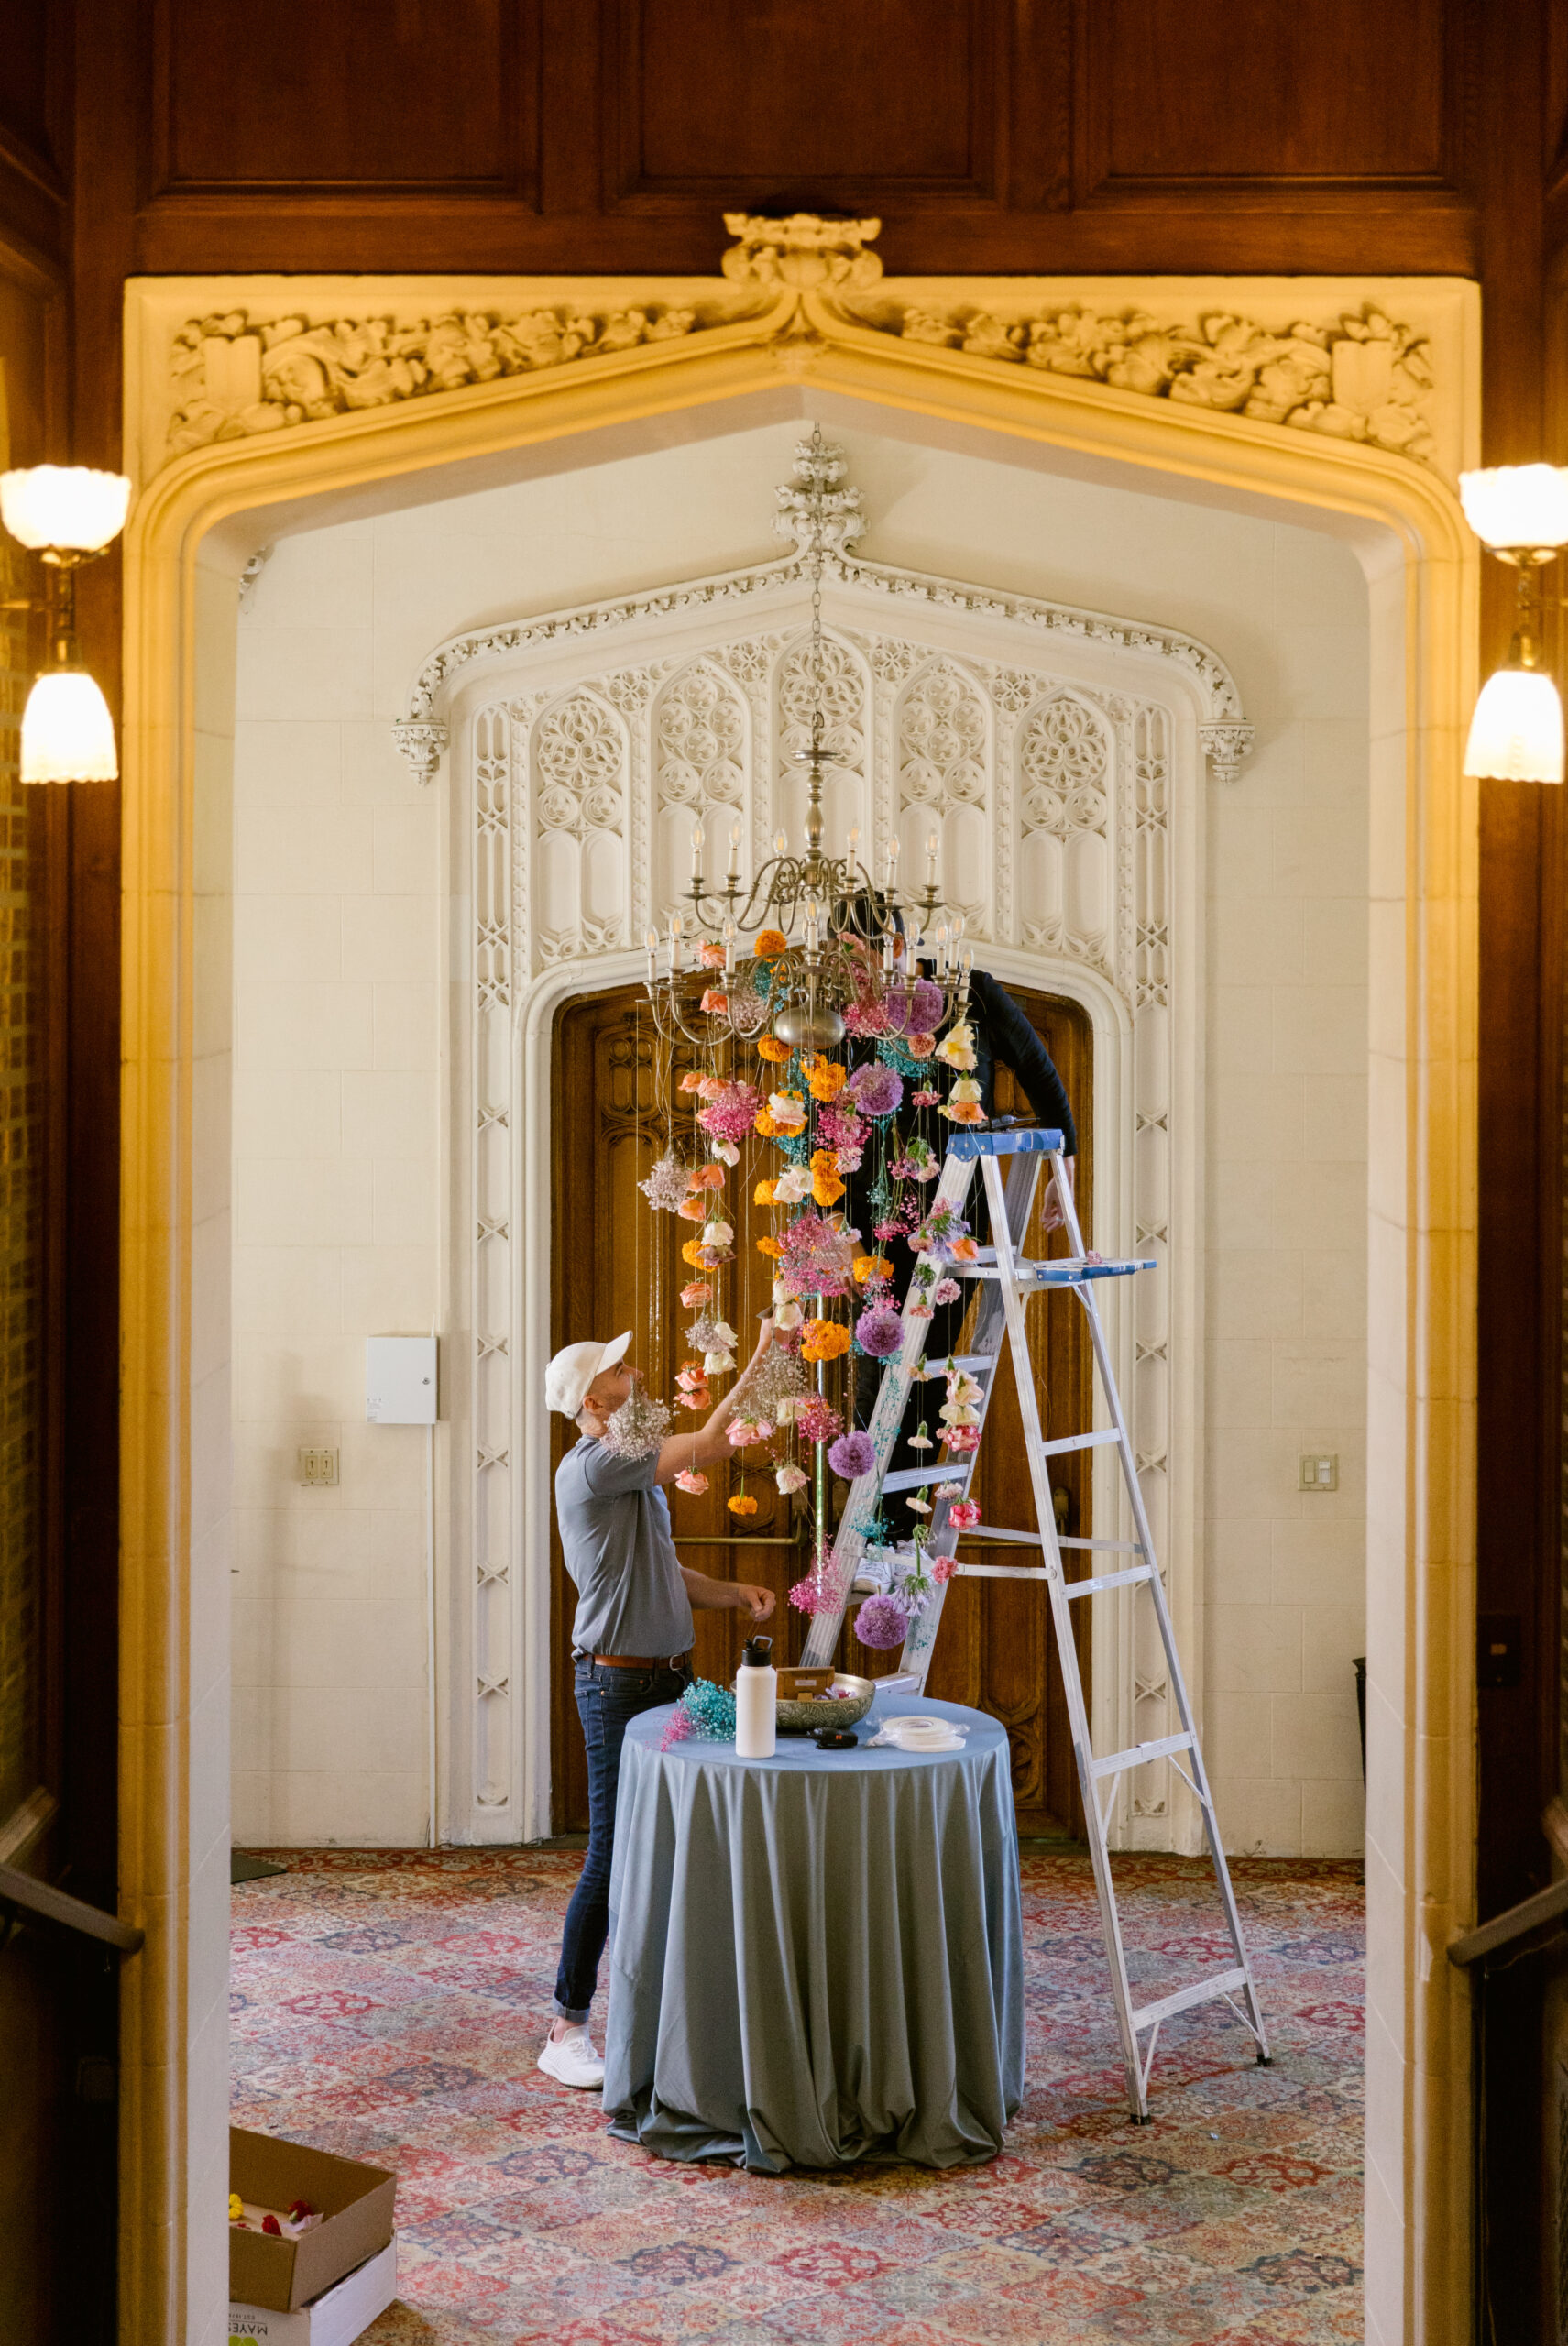 San Francisco Kohl Mansion Colorful City Wedding Ampersand SF setting up colorful floral chandelier gold regal carved doorway